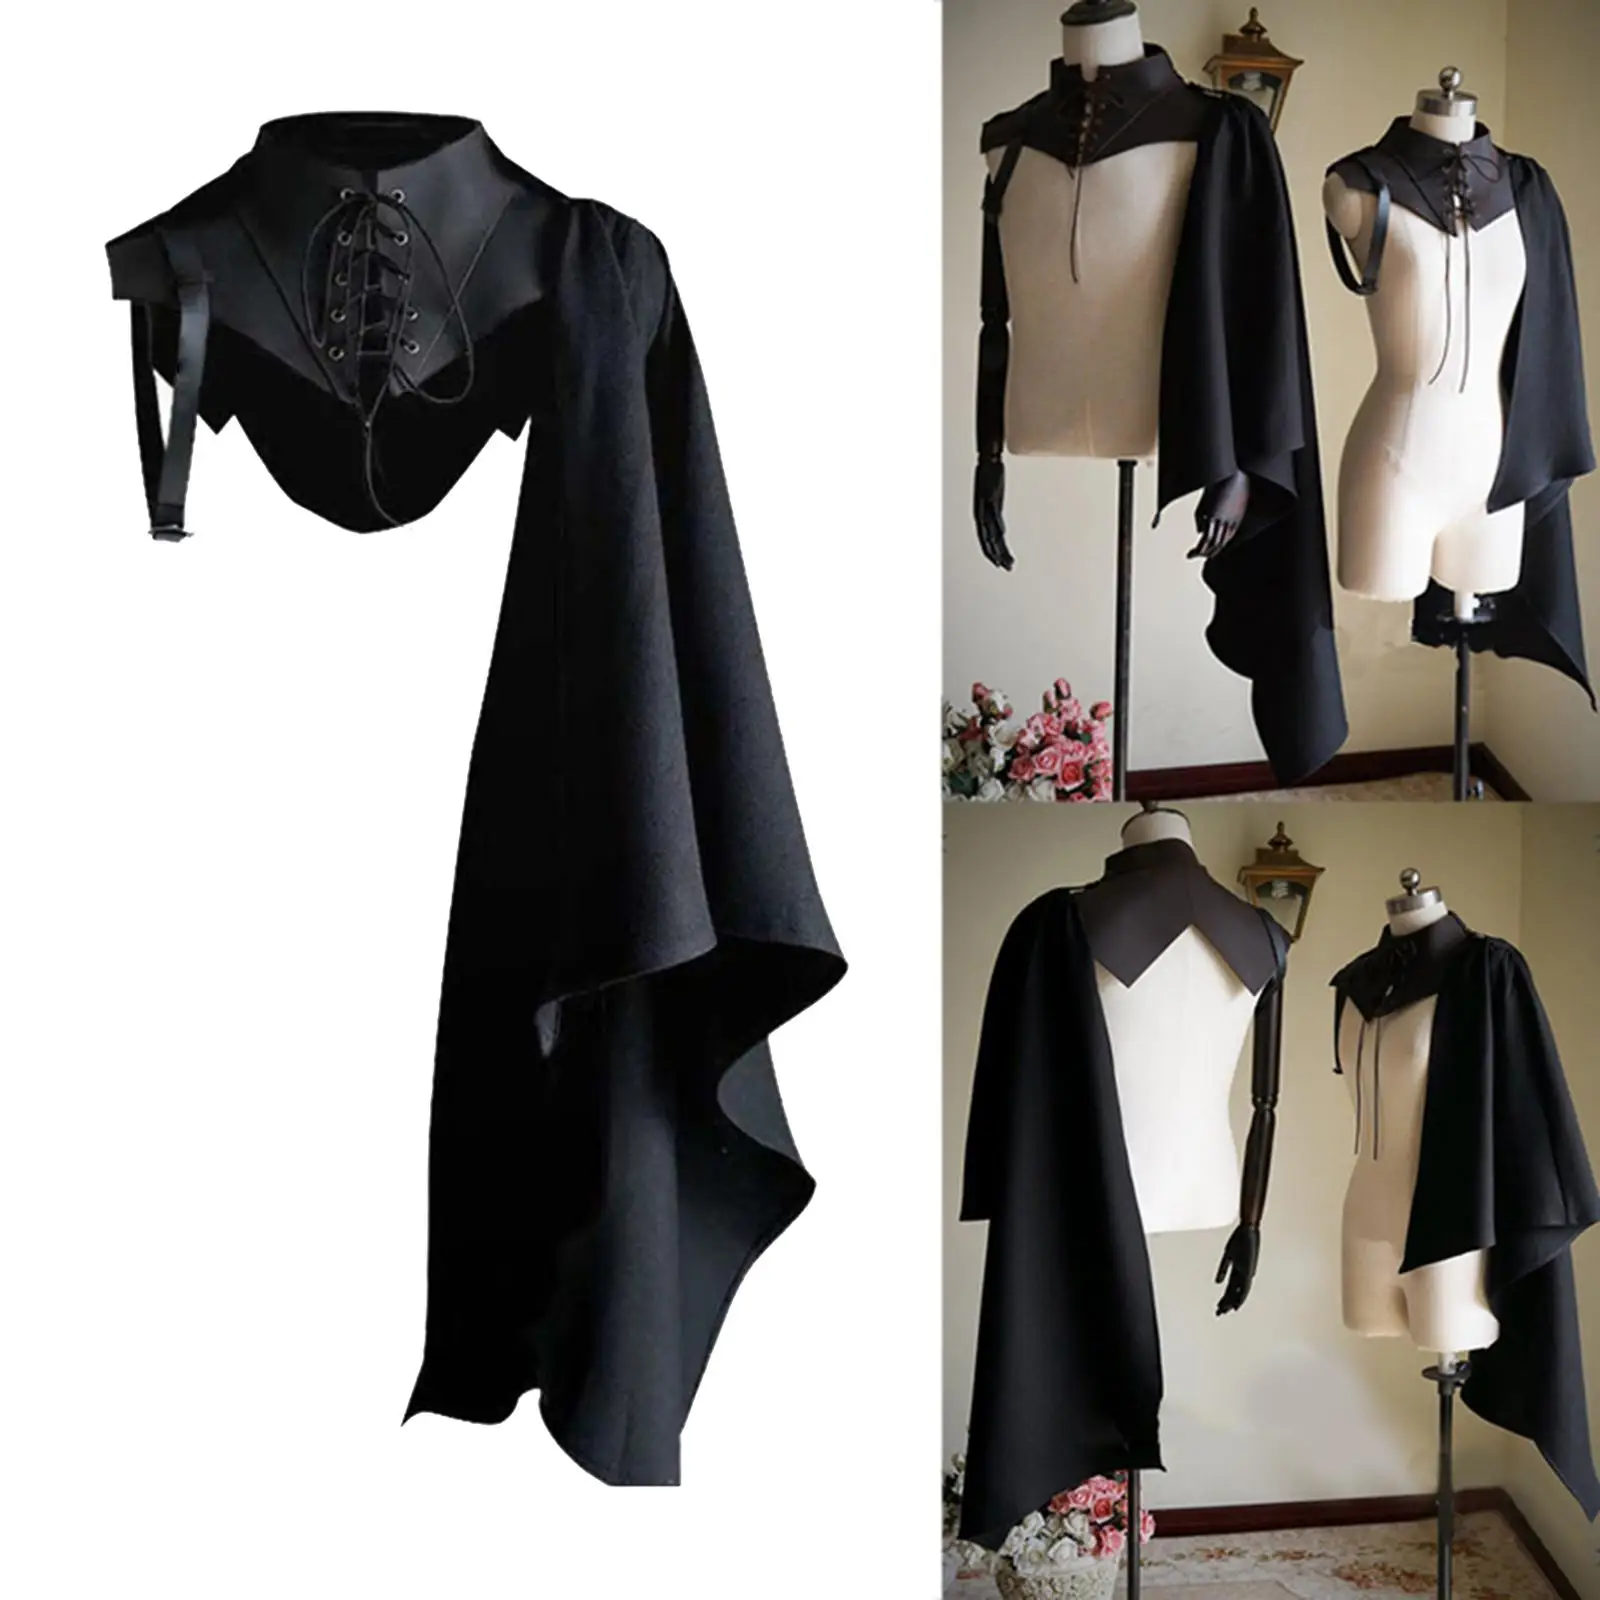 Women Men Accessories Uniform Elastic Neckline Cloak Gothic Clothing Costume Punk Medieval Armor Black Cloak for Party Halloween